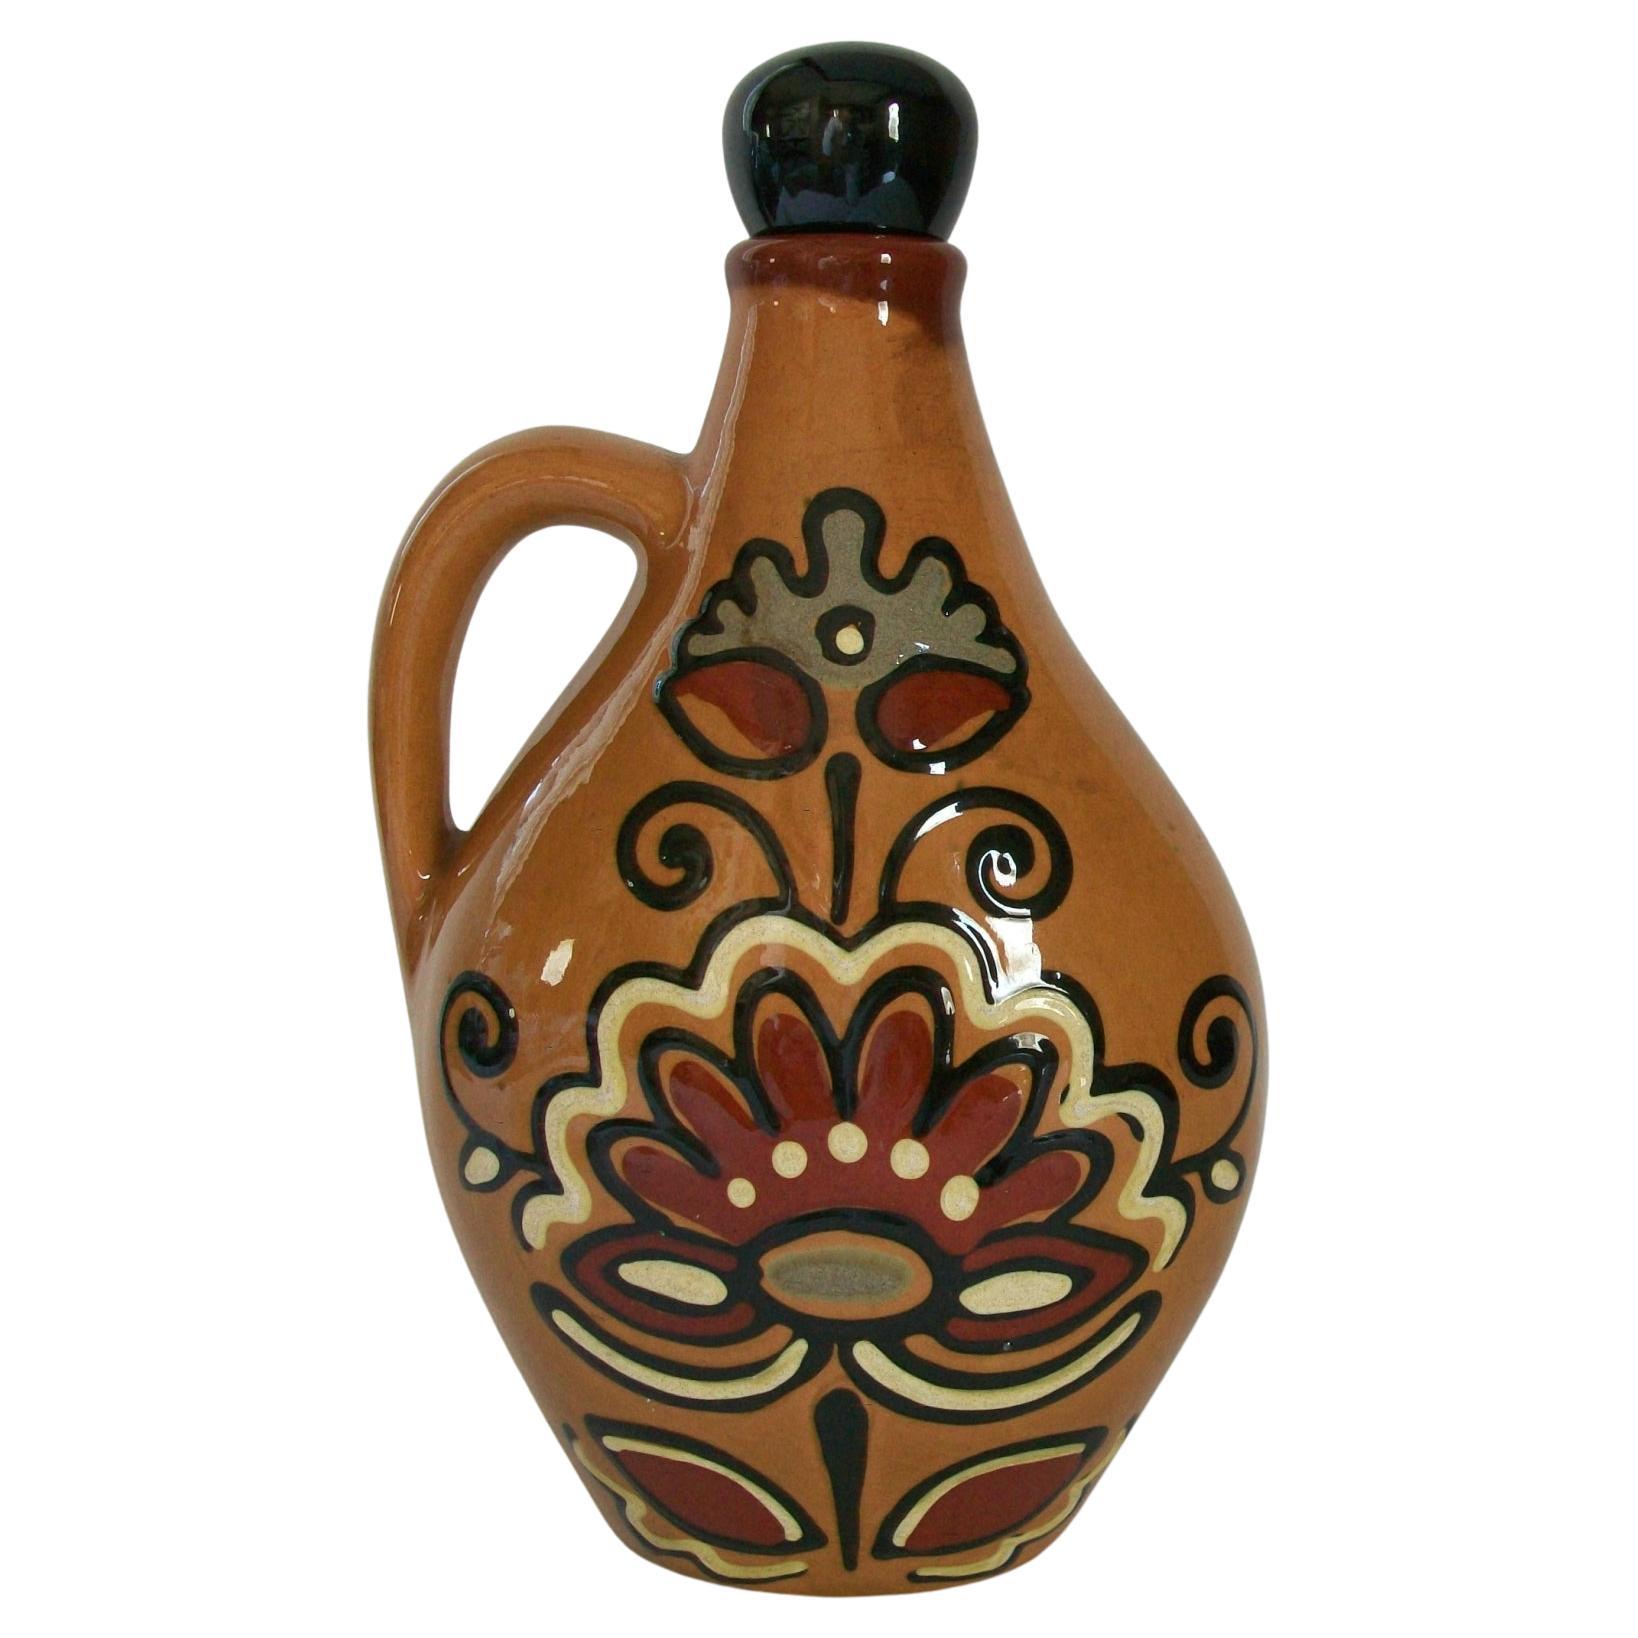 Vintage Gouda-Keramikkrug mit Stopper, handbemalt, Holland, 20. Jahrhundert